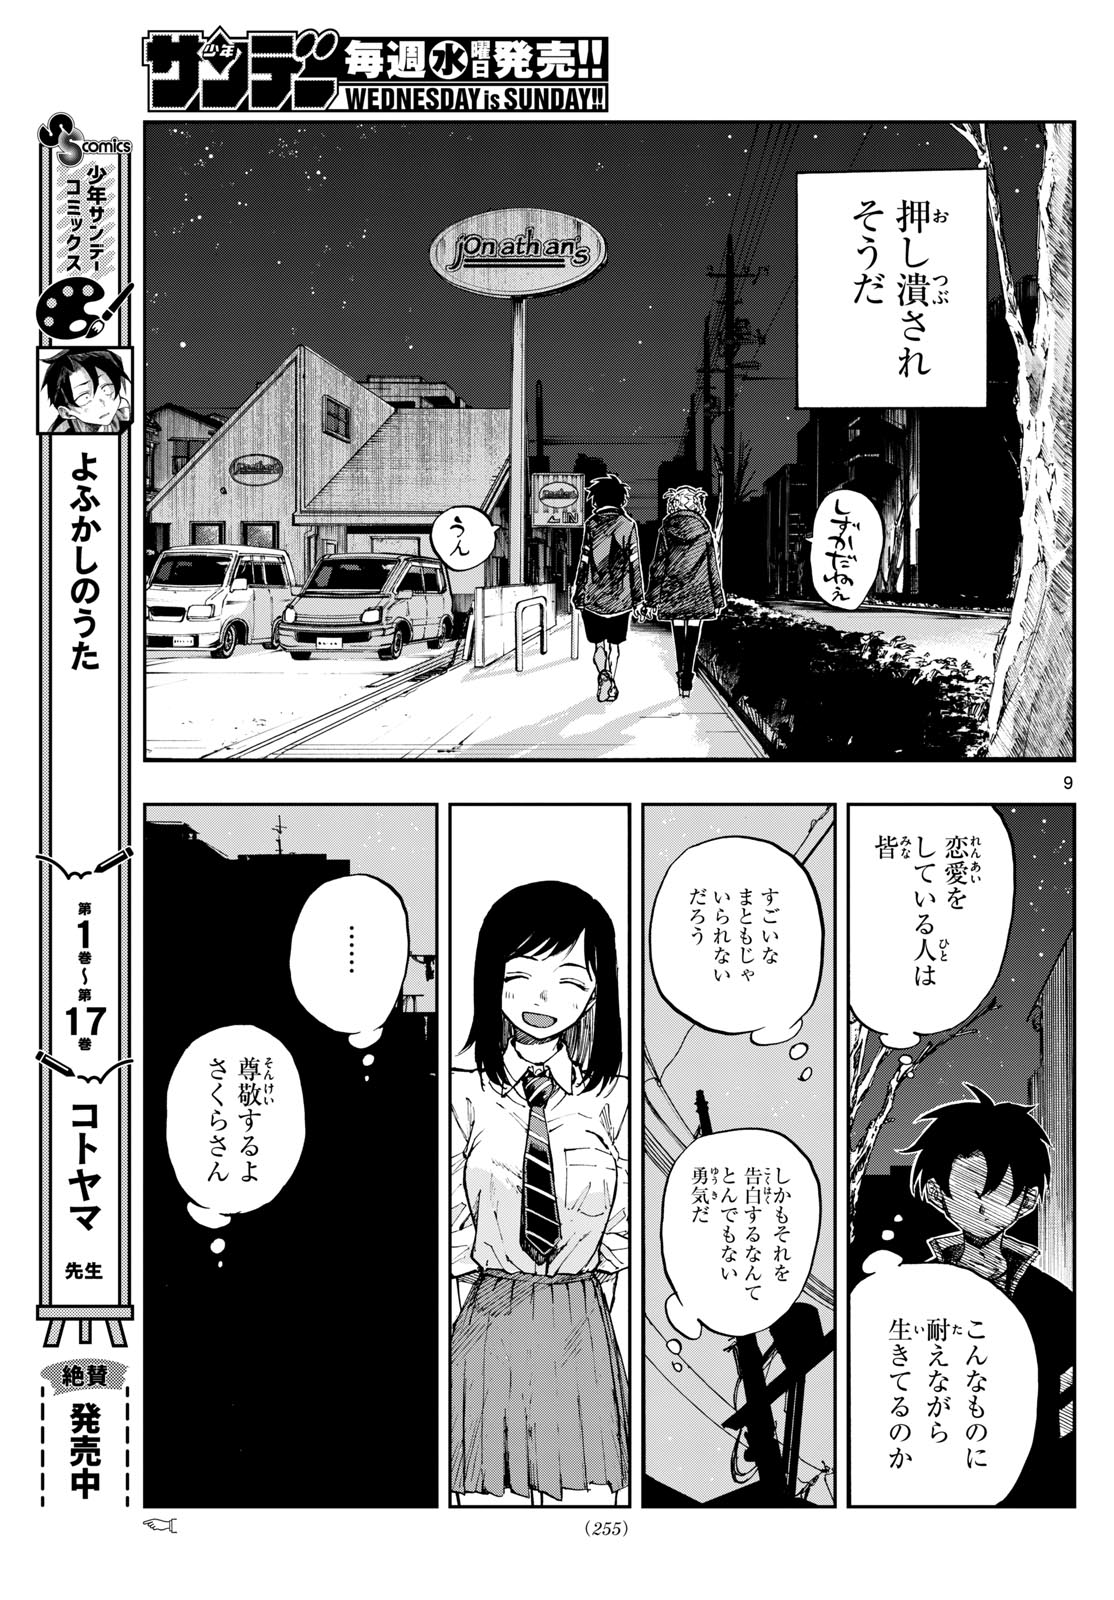 DISC] - Yofukashi no Uta Ch. 188 - Lukewarm : r/manga